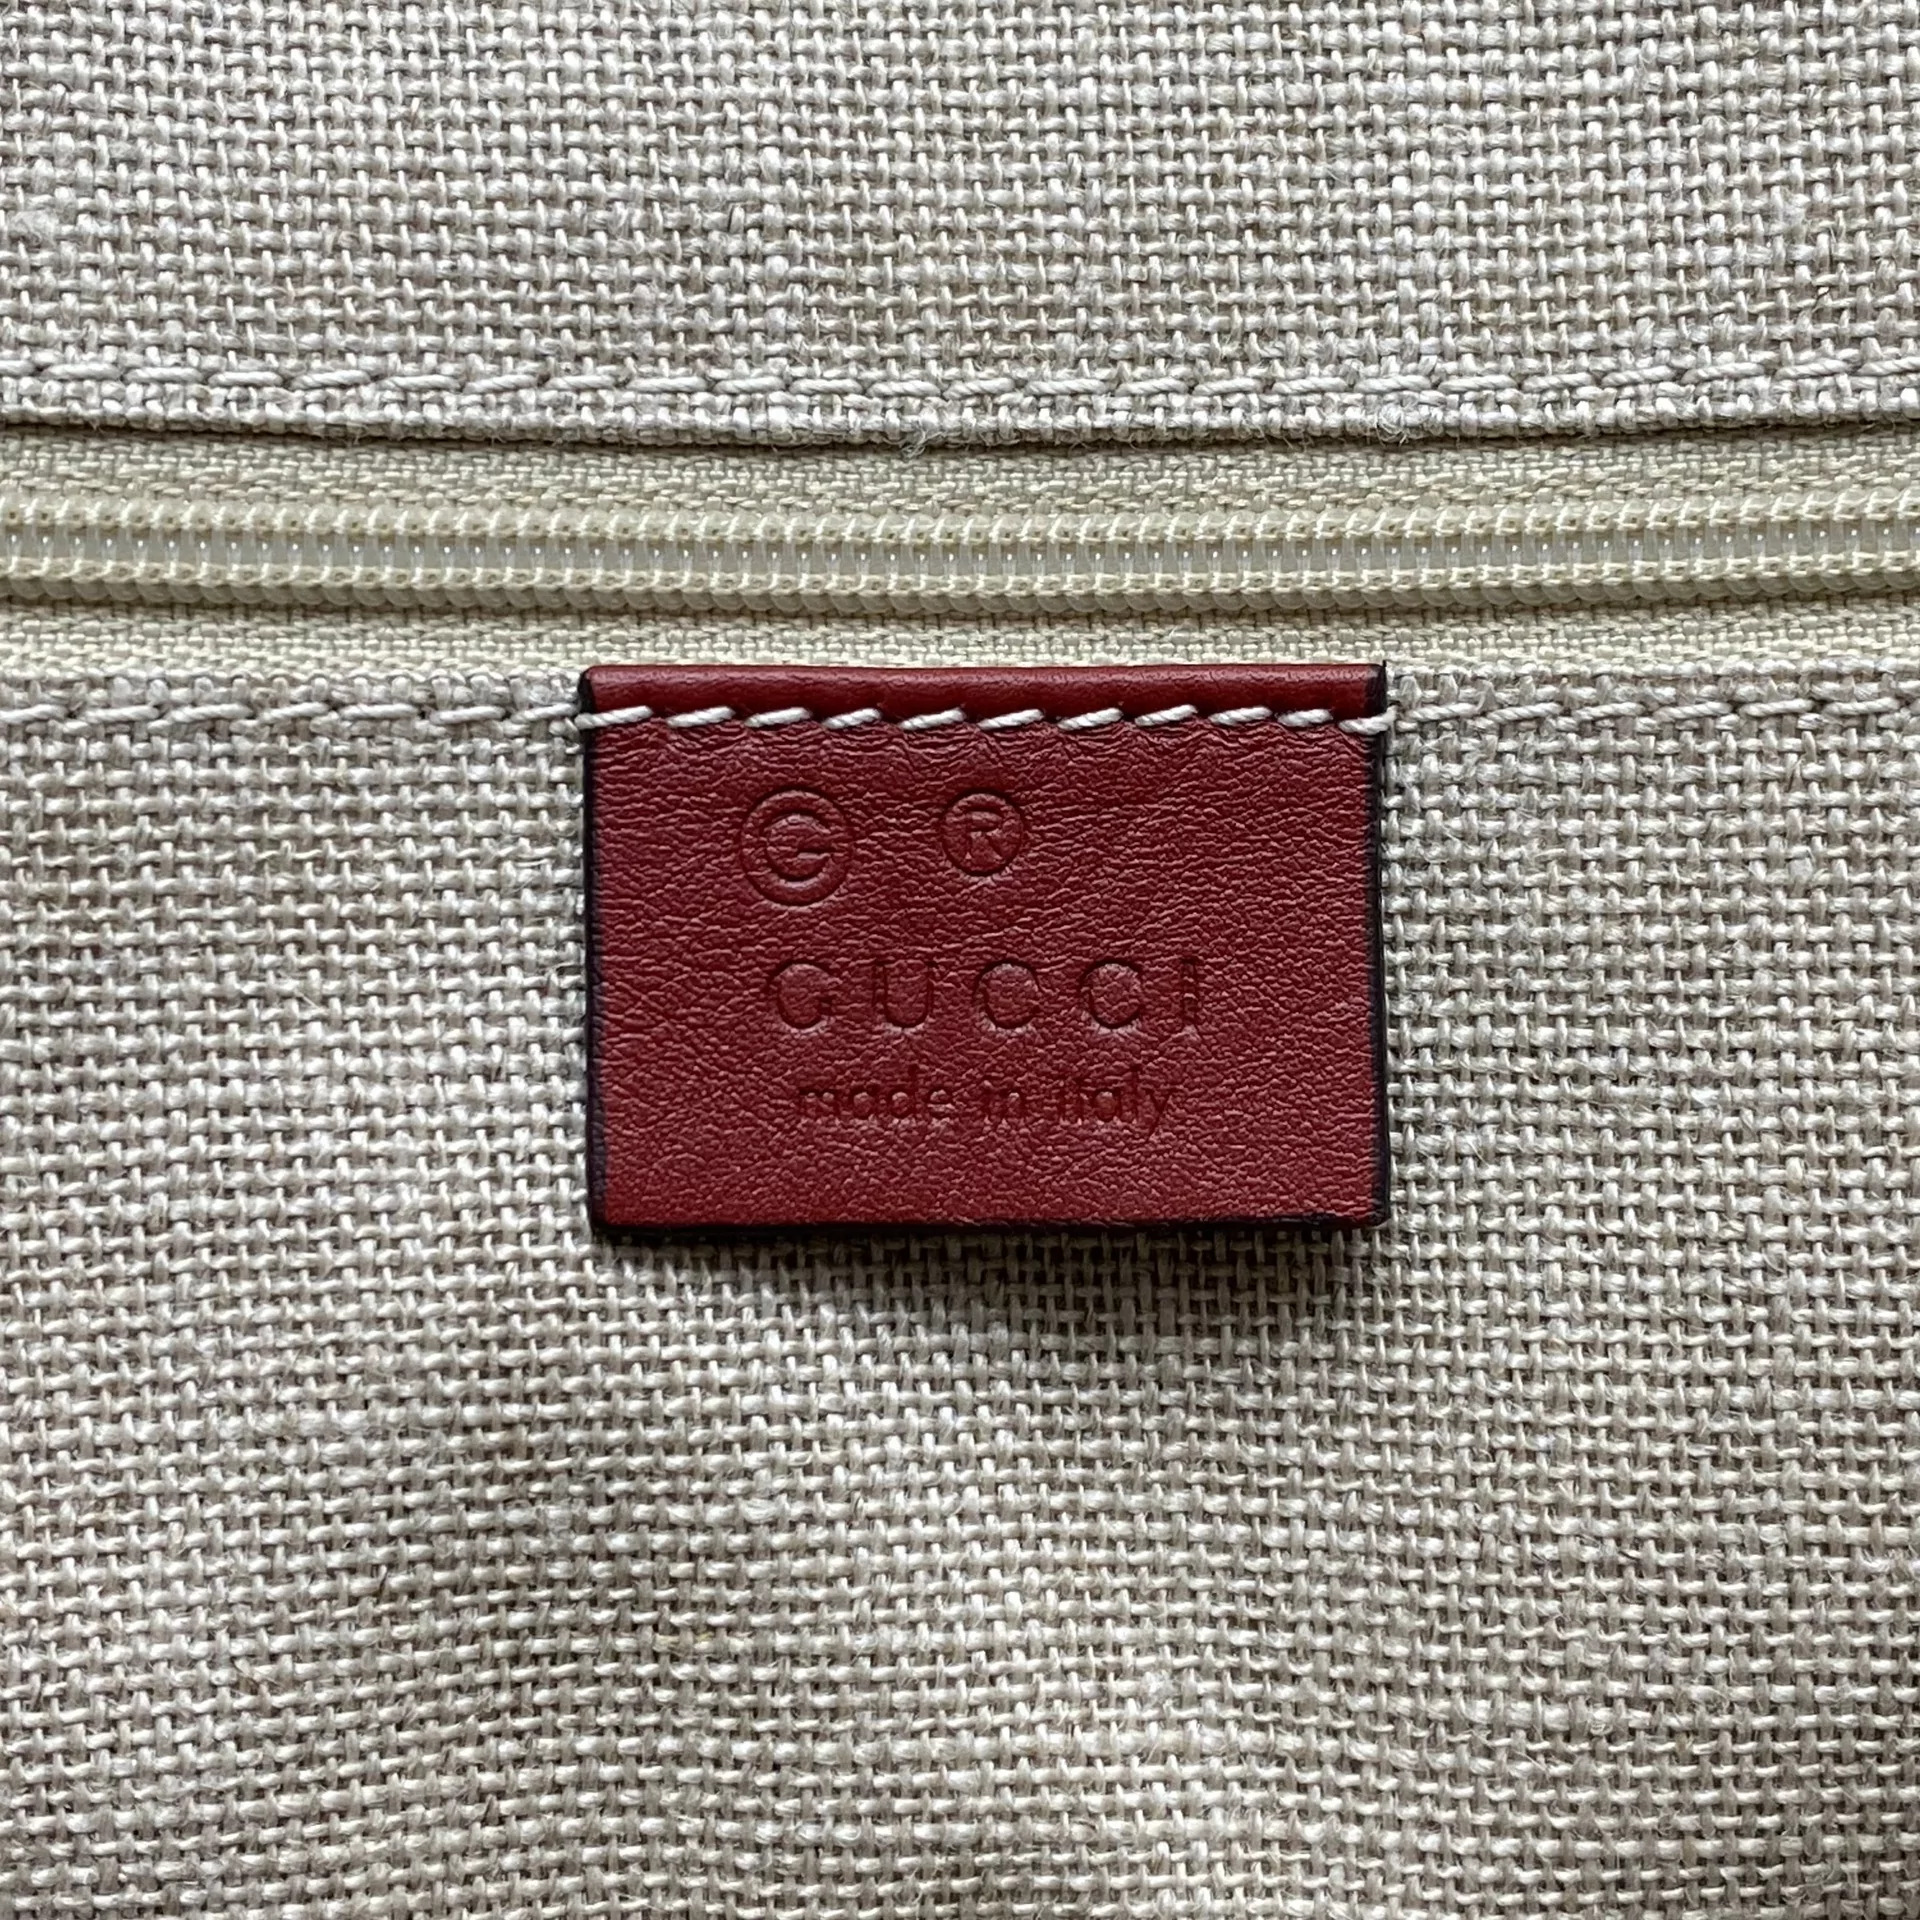 Bolsa Gucci Microguccissima Vermelha